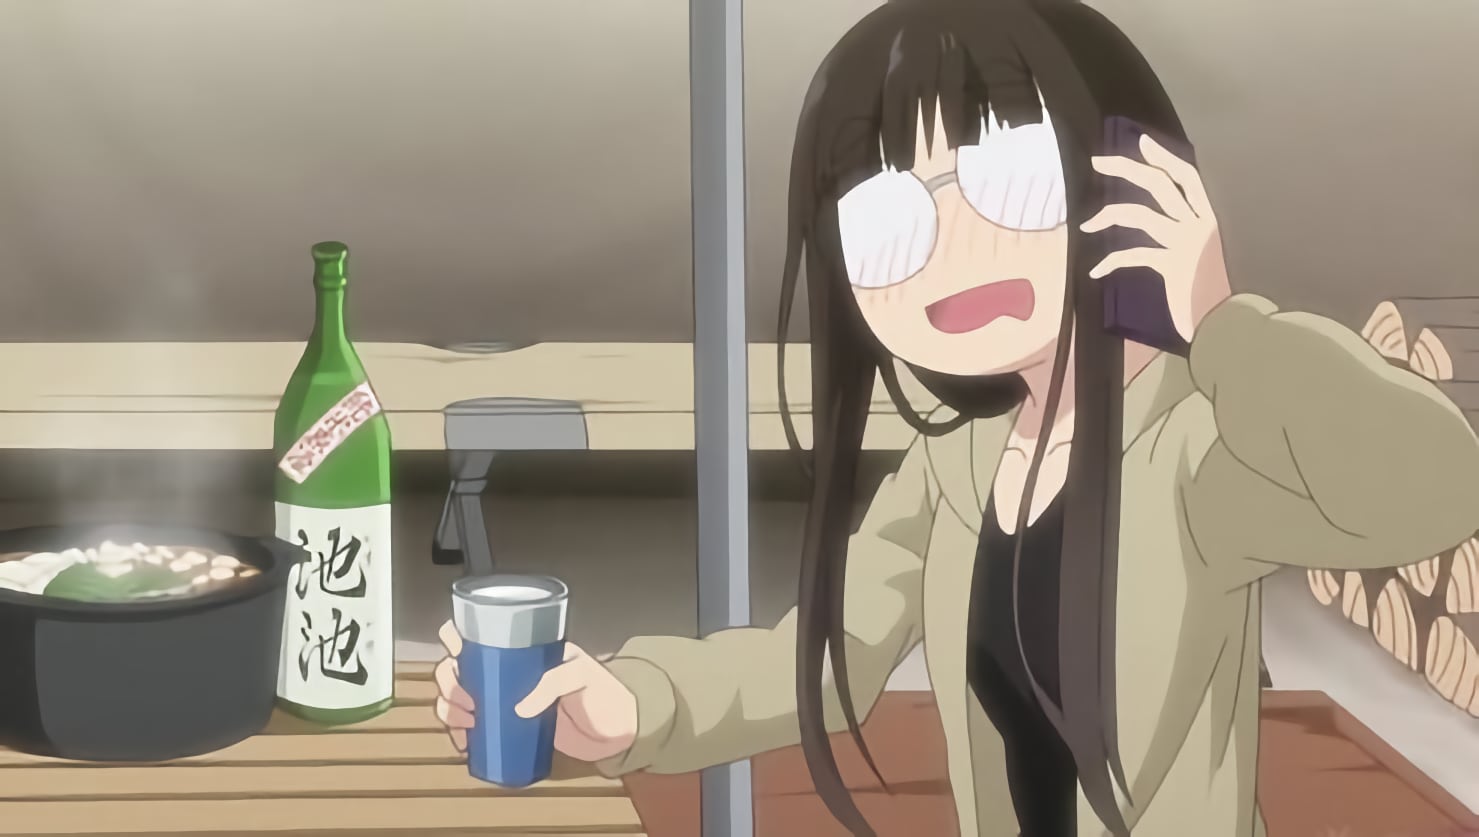 Young People in Japan Drinking Less Sake